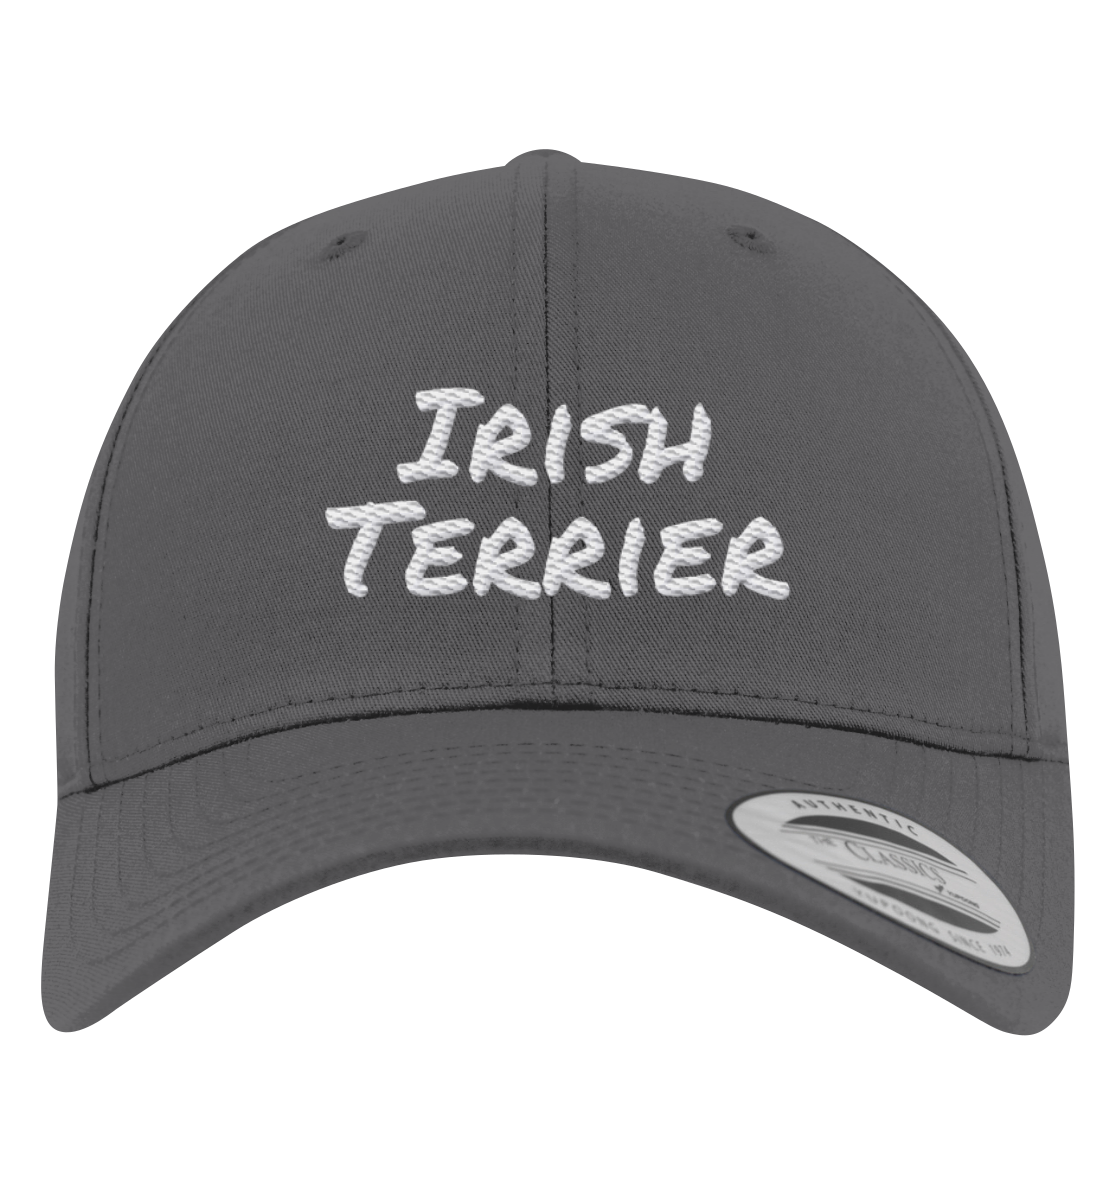 Irish Terrier - Premium Baseball Cap